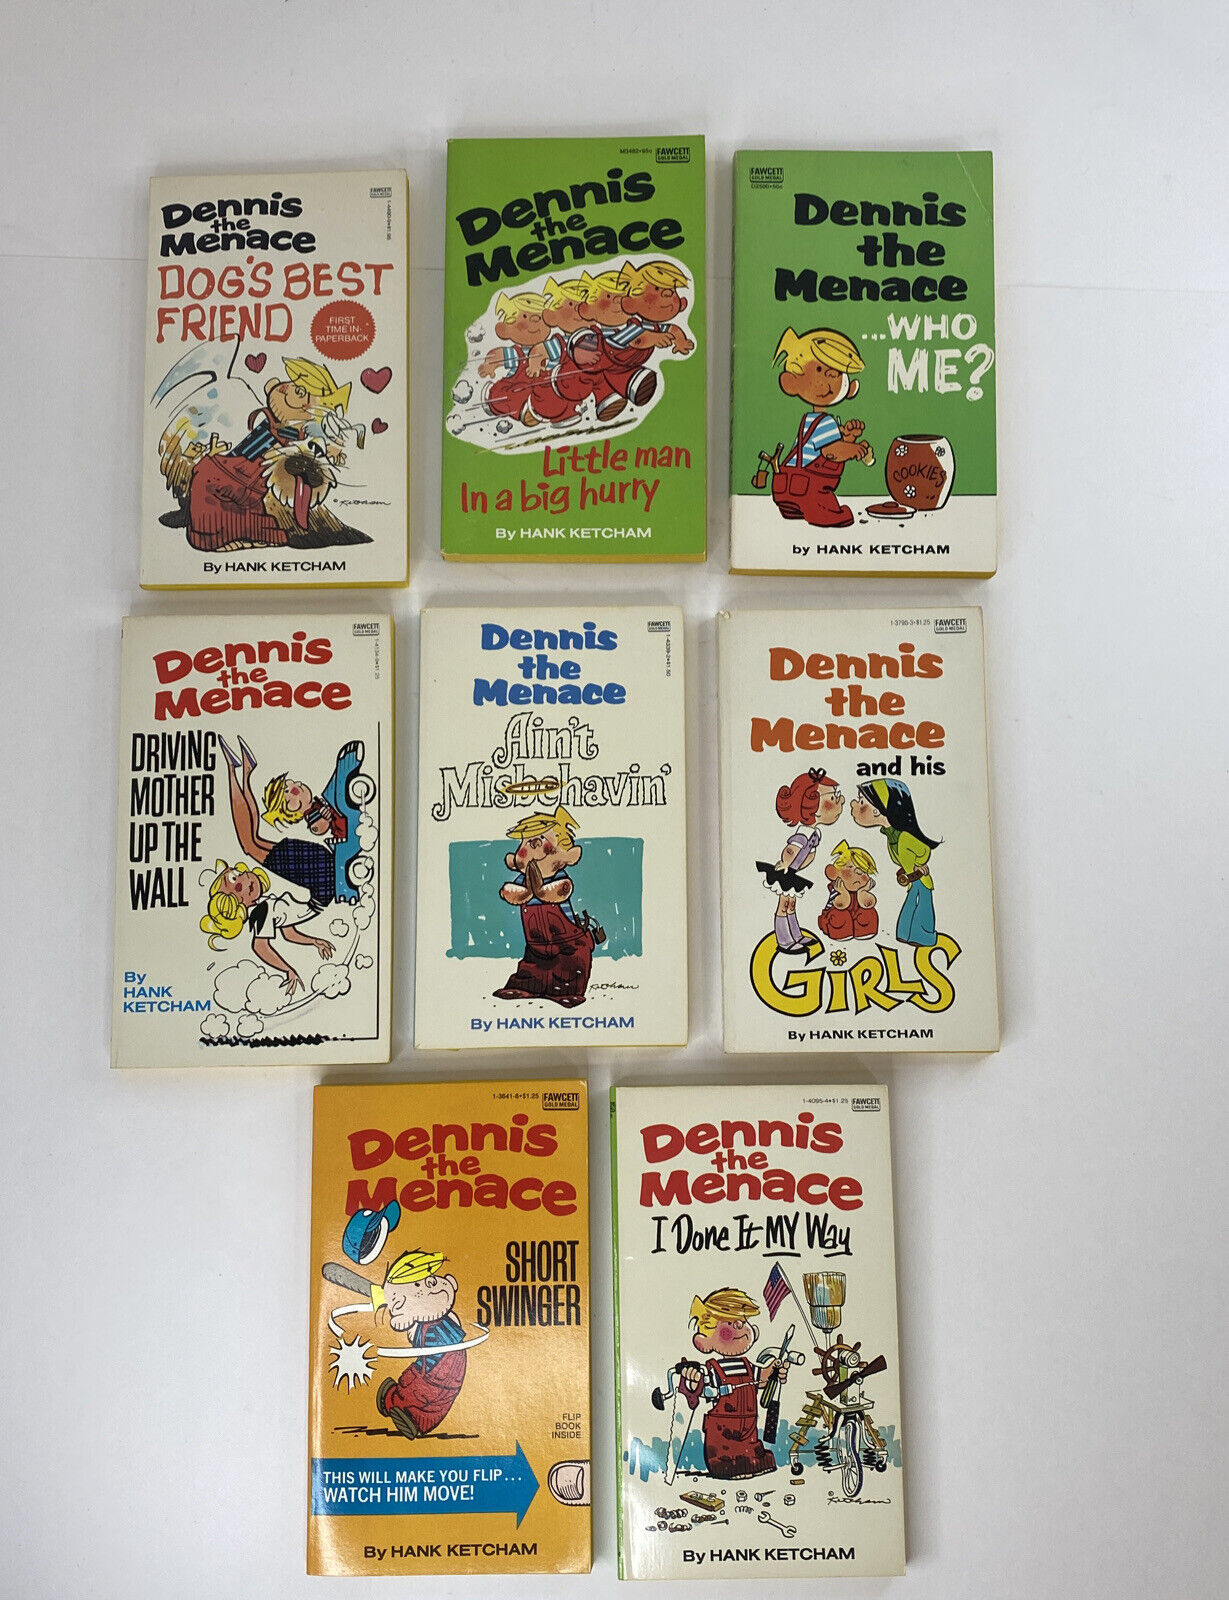 VTG Book Lot of 8 Dennis The Menace Paperback Books by Hank Ketcham 1960-1970's